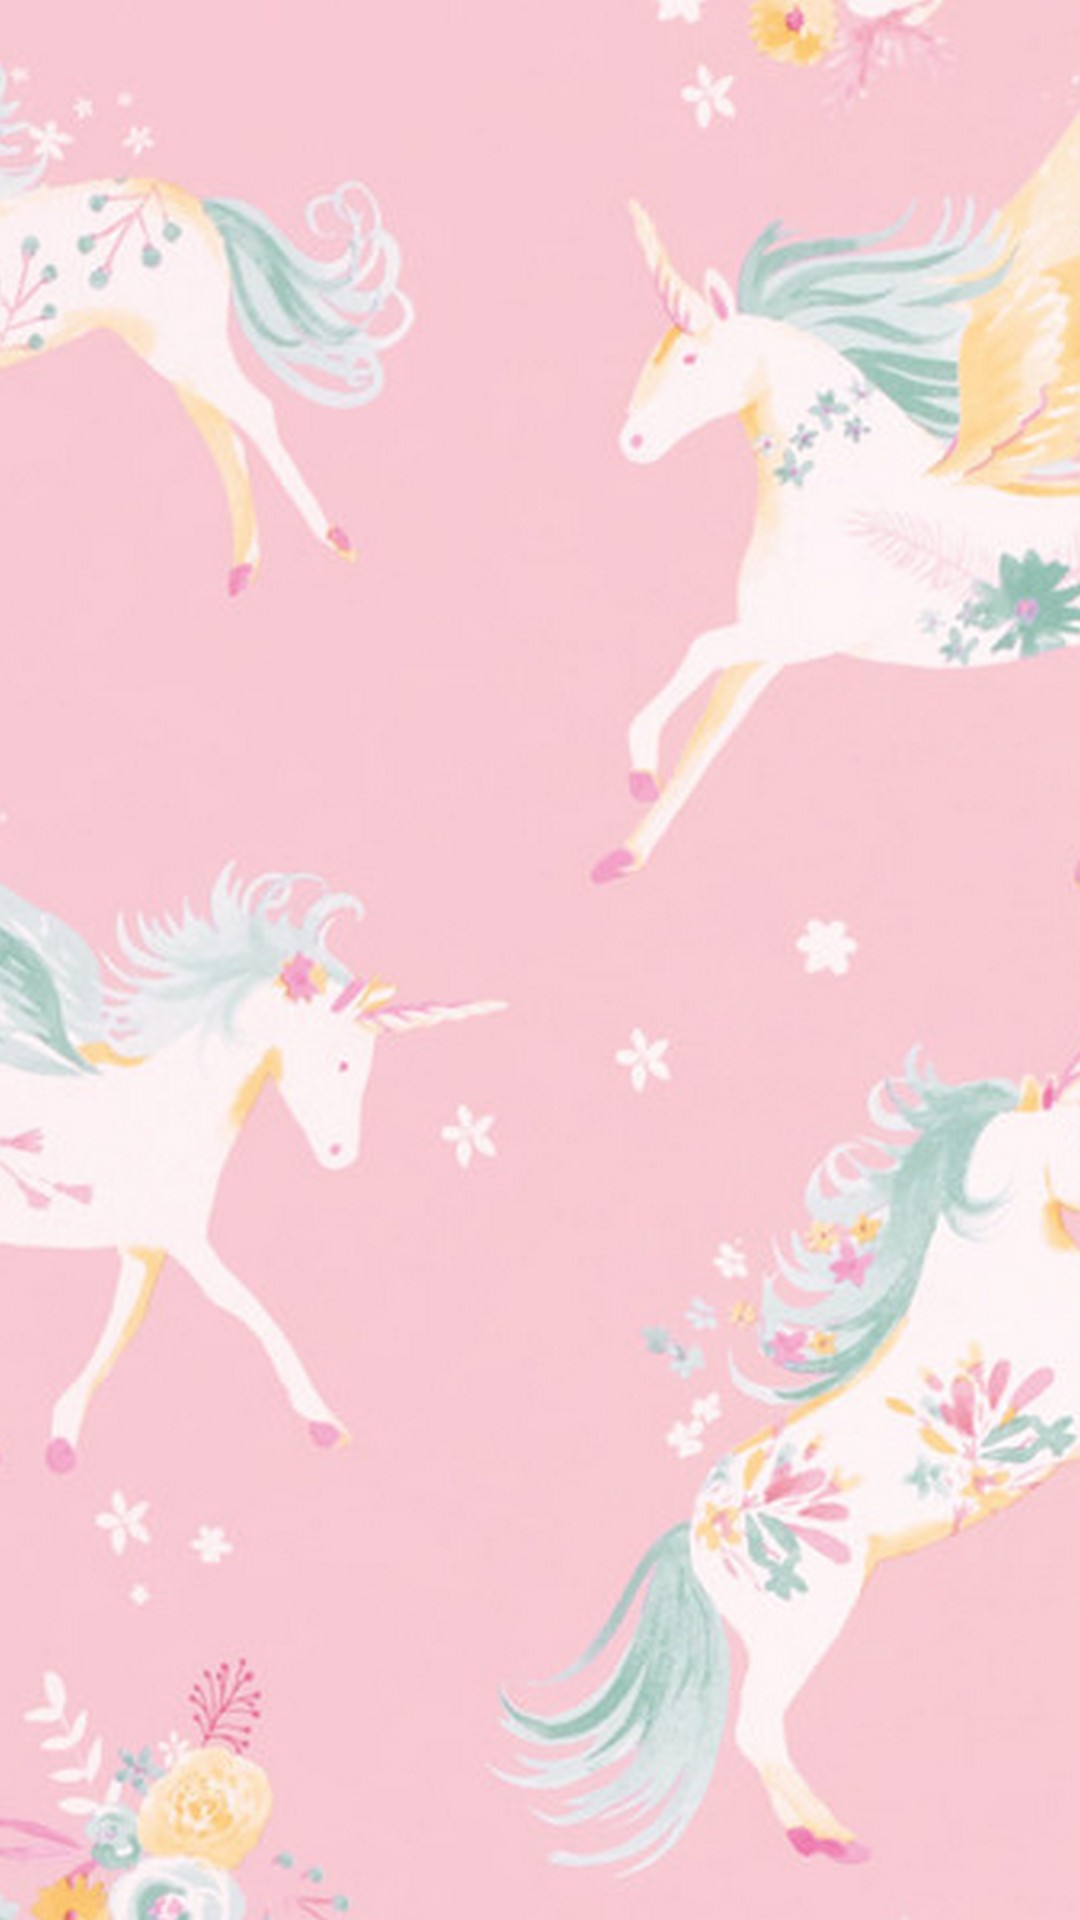 unicorn wallpaper,pink,unicorn,fictional character,mythical creature,illustration